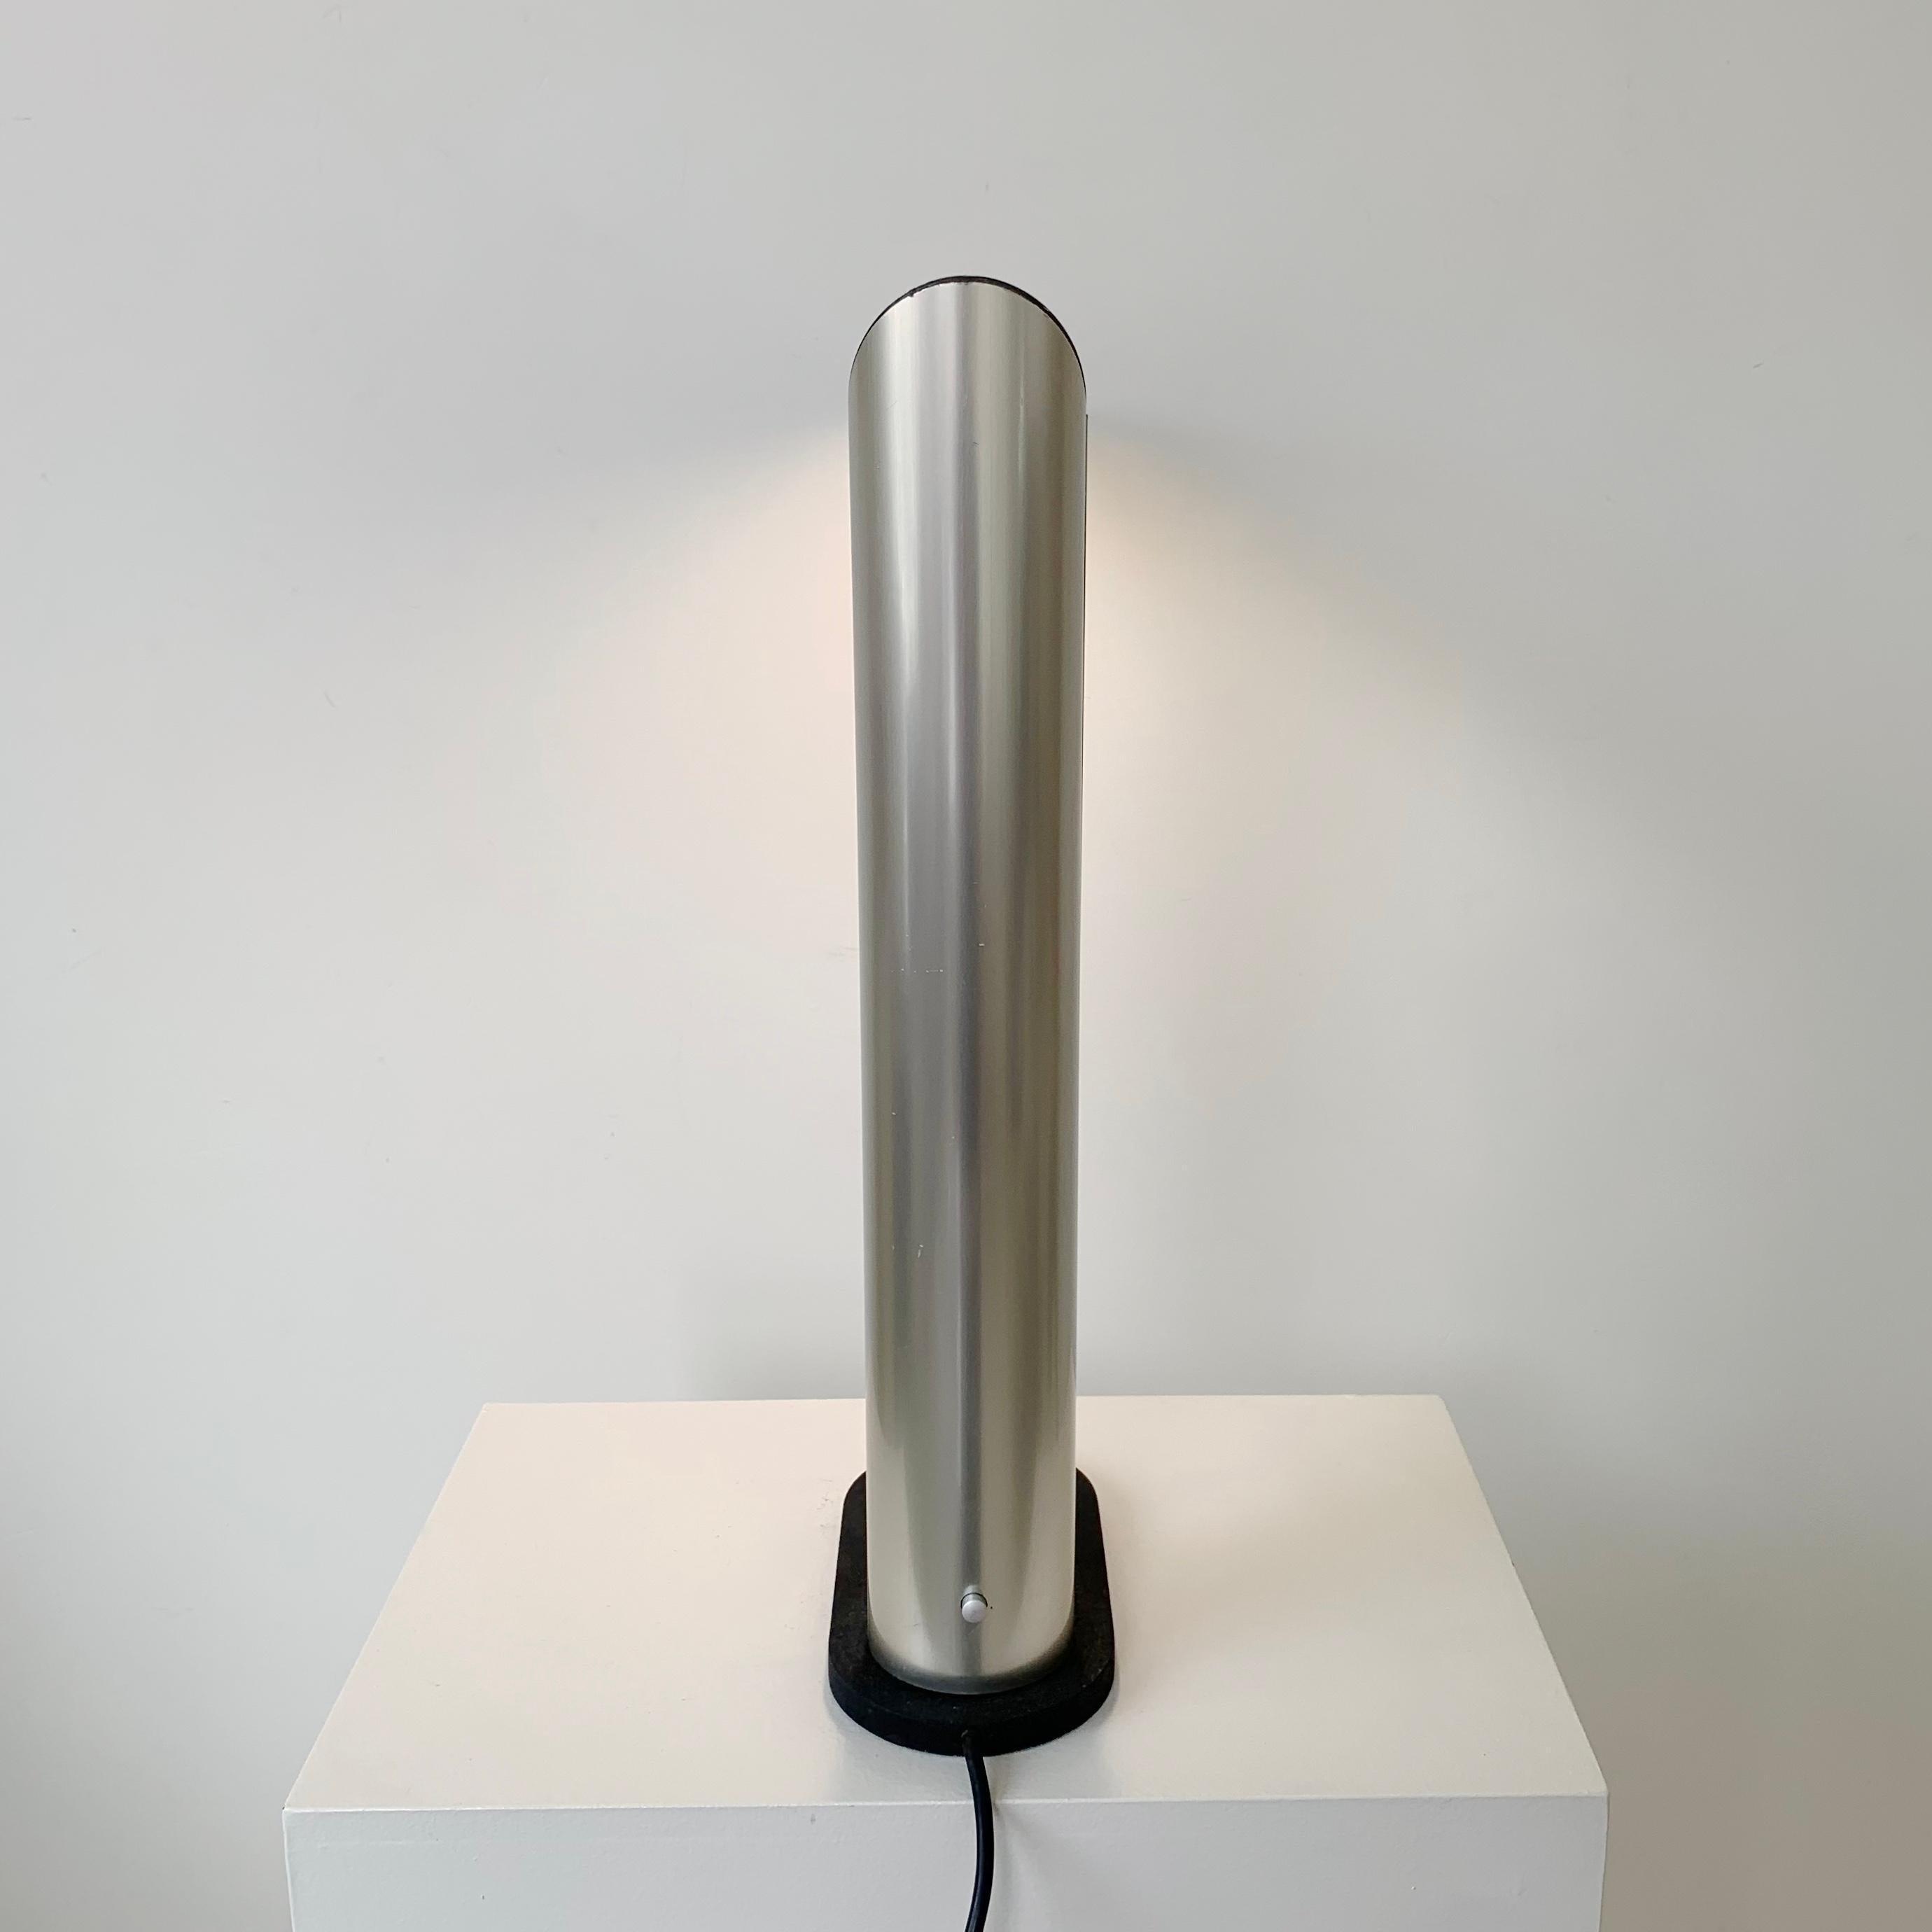 Metal Sabine Charoy Desk Lamp, Edition Verre Lumiere, 1981, France For Sale